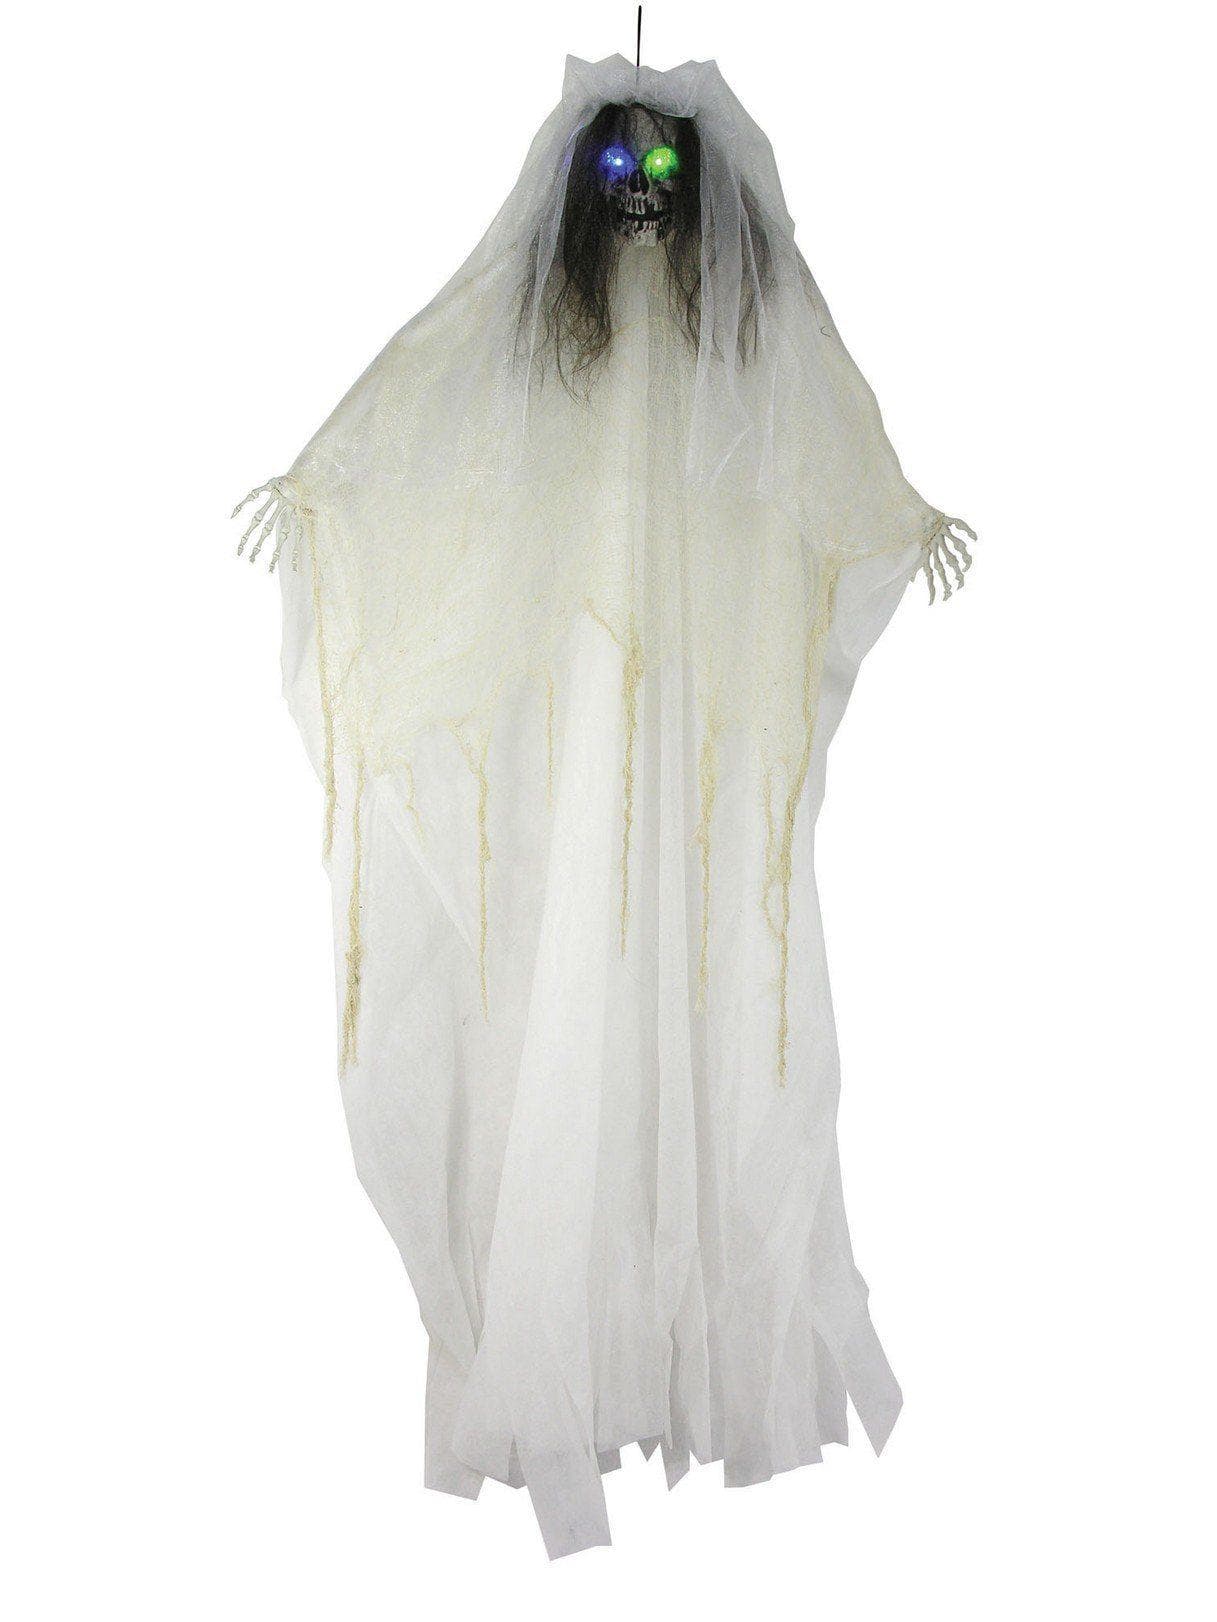 57-inch Light Up Hanging Bride - costumes.com